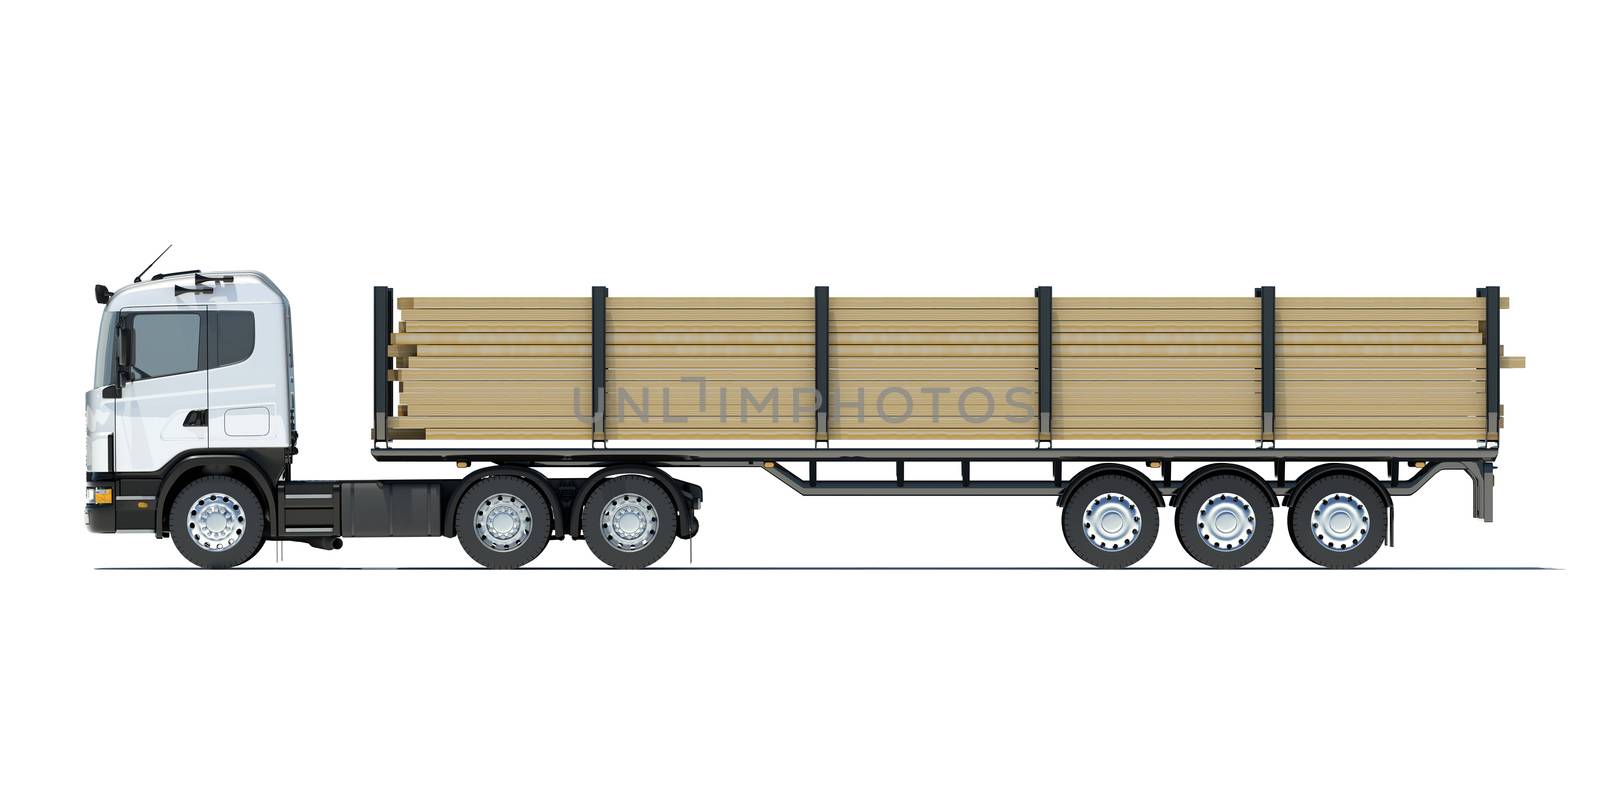 Truck transporting lumber by cherezoff